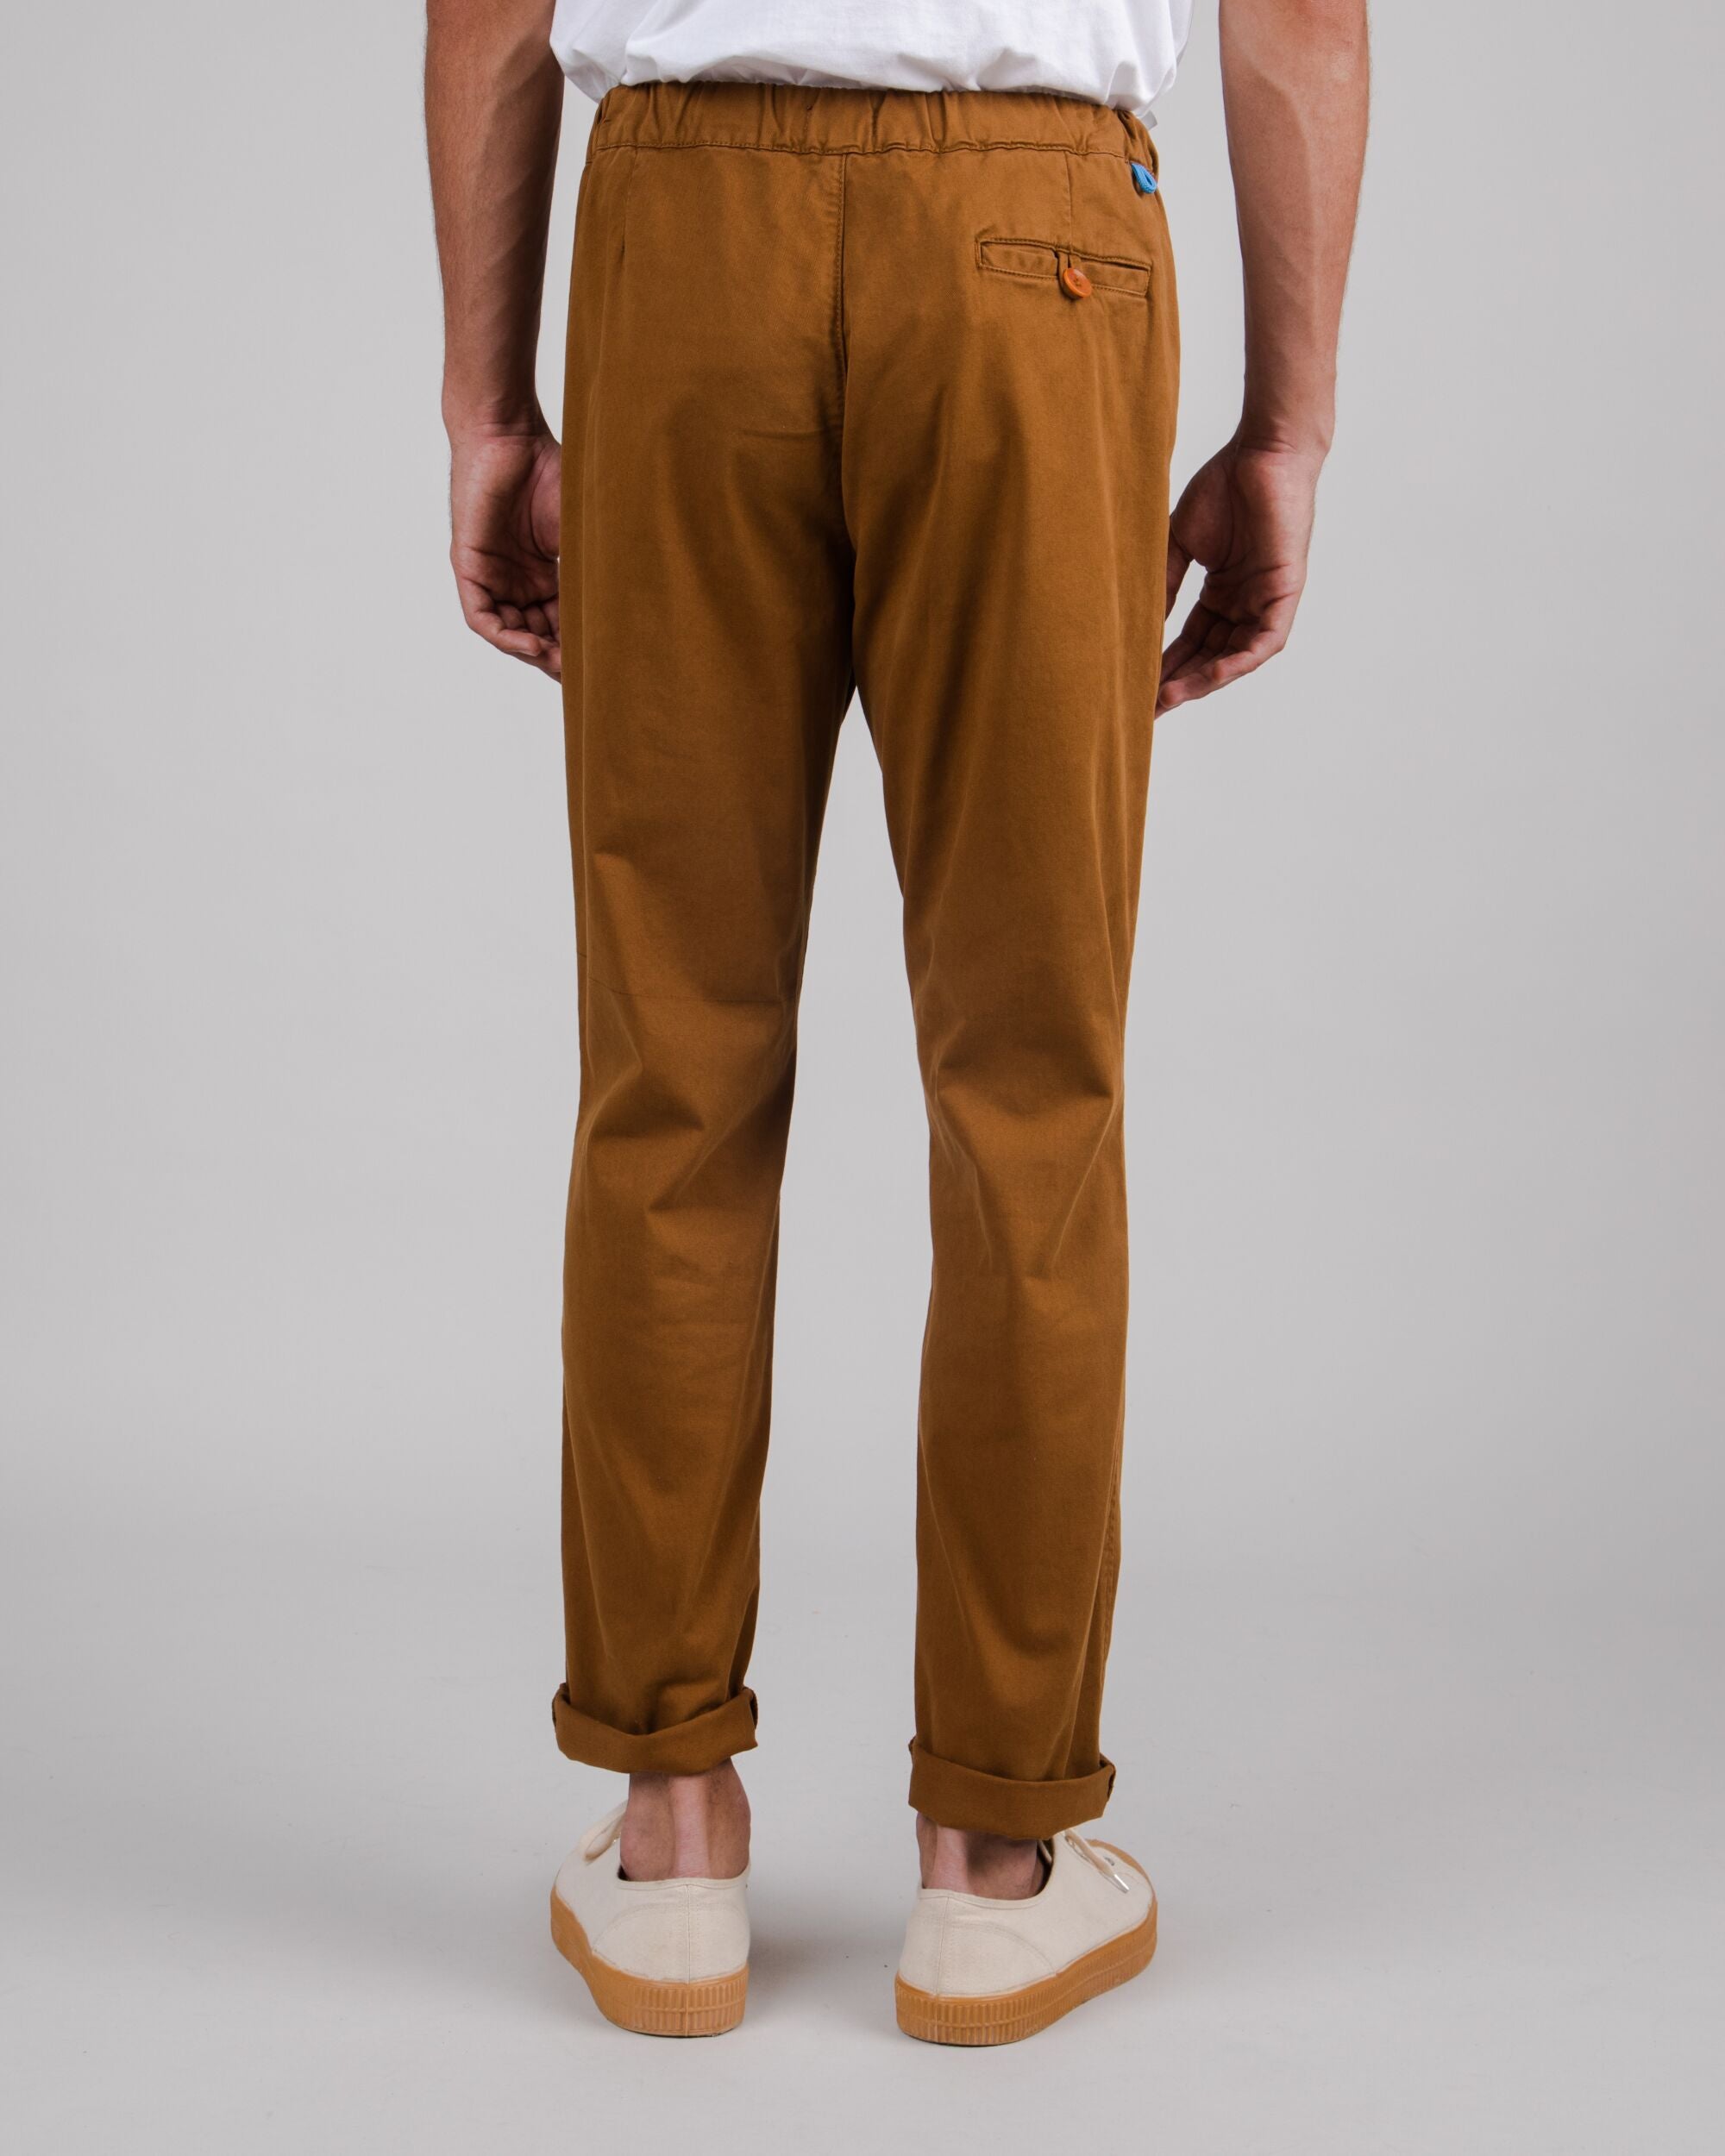 Pantalon chino confort marron en coton biologique de Brava Fabrics